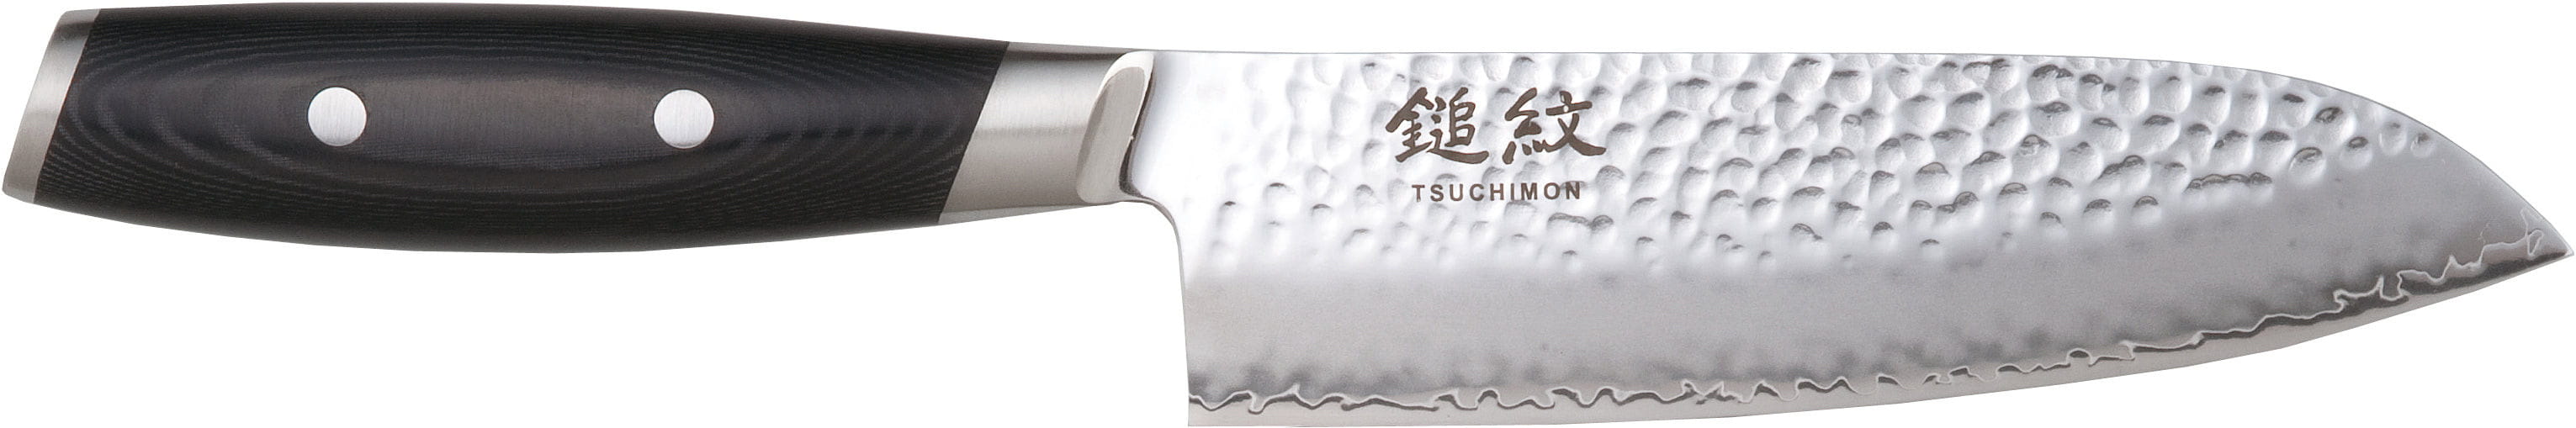 Coltello Yaxell Tsuchimon Santoku, 16,5 cm